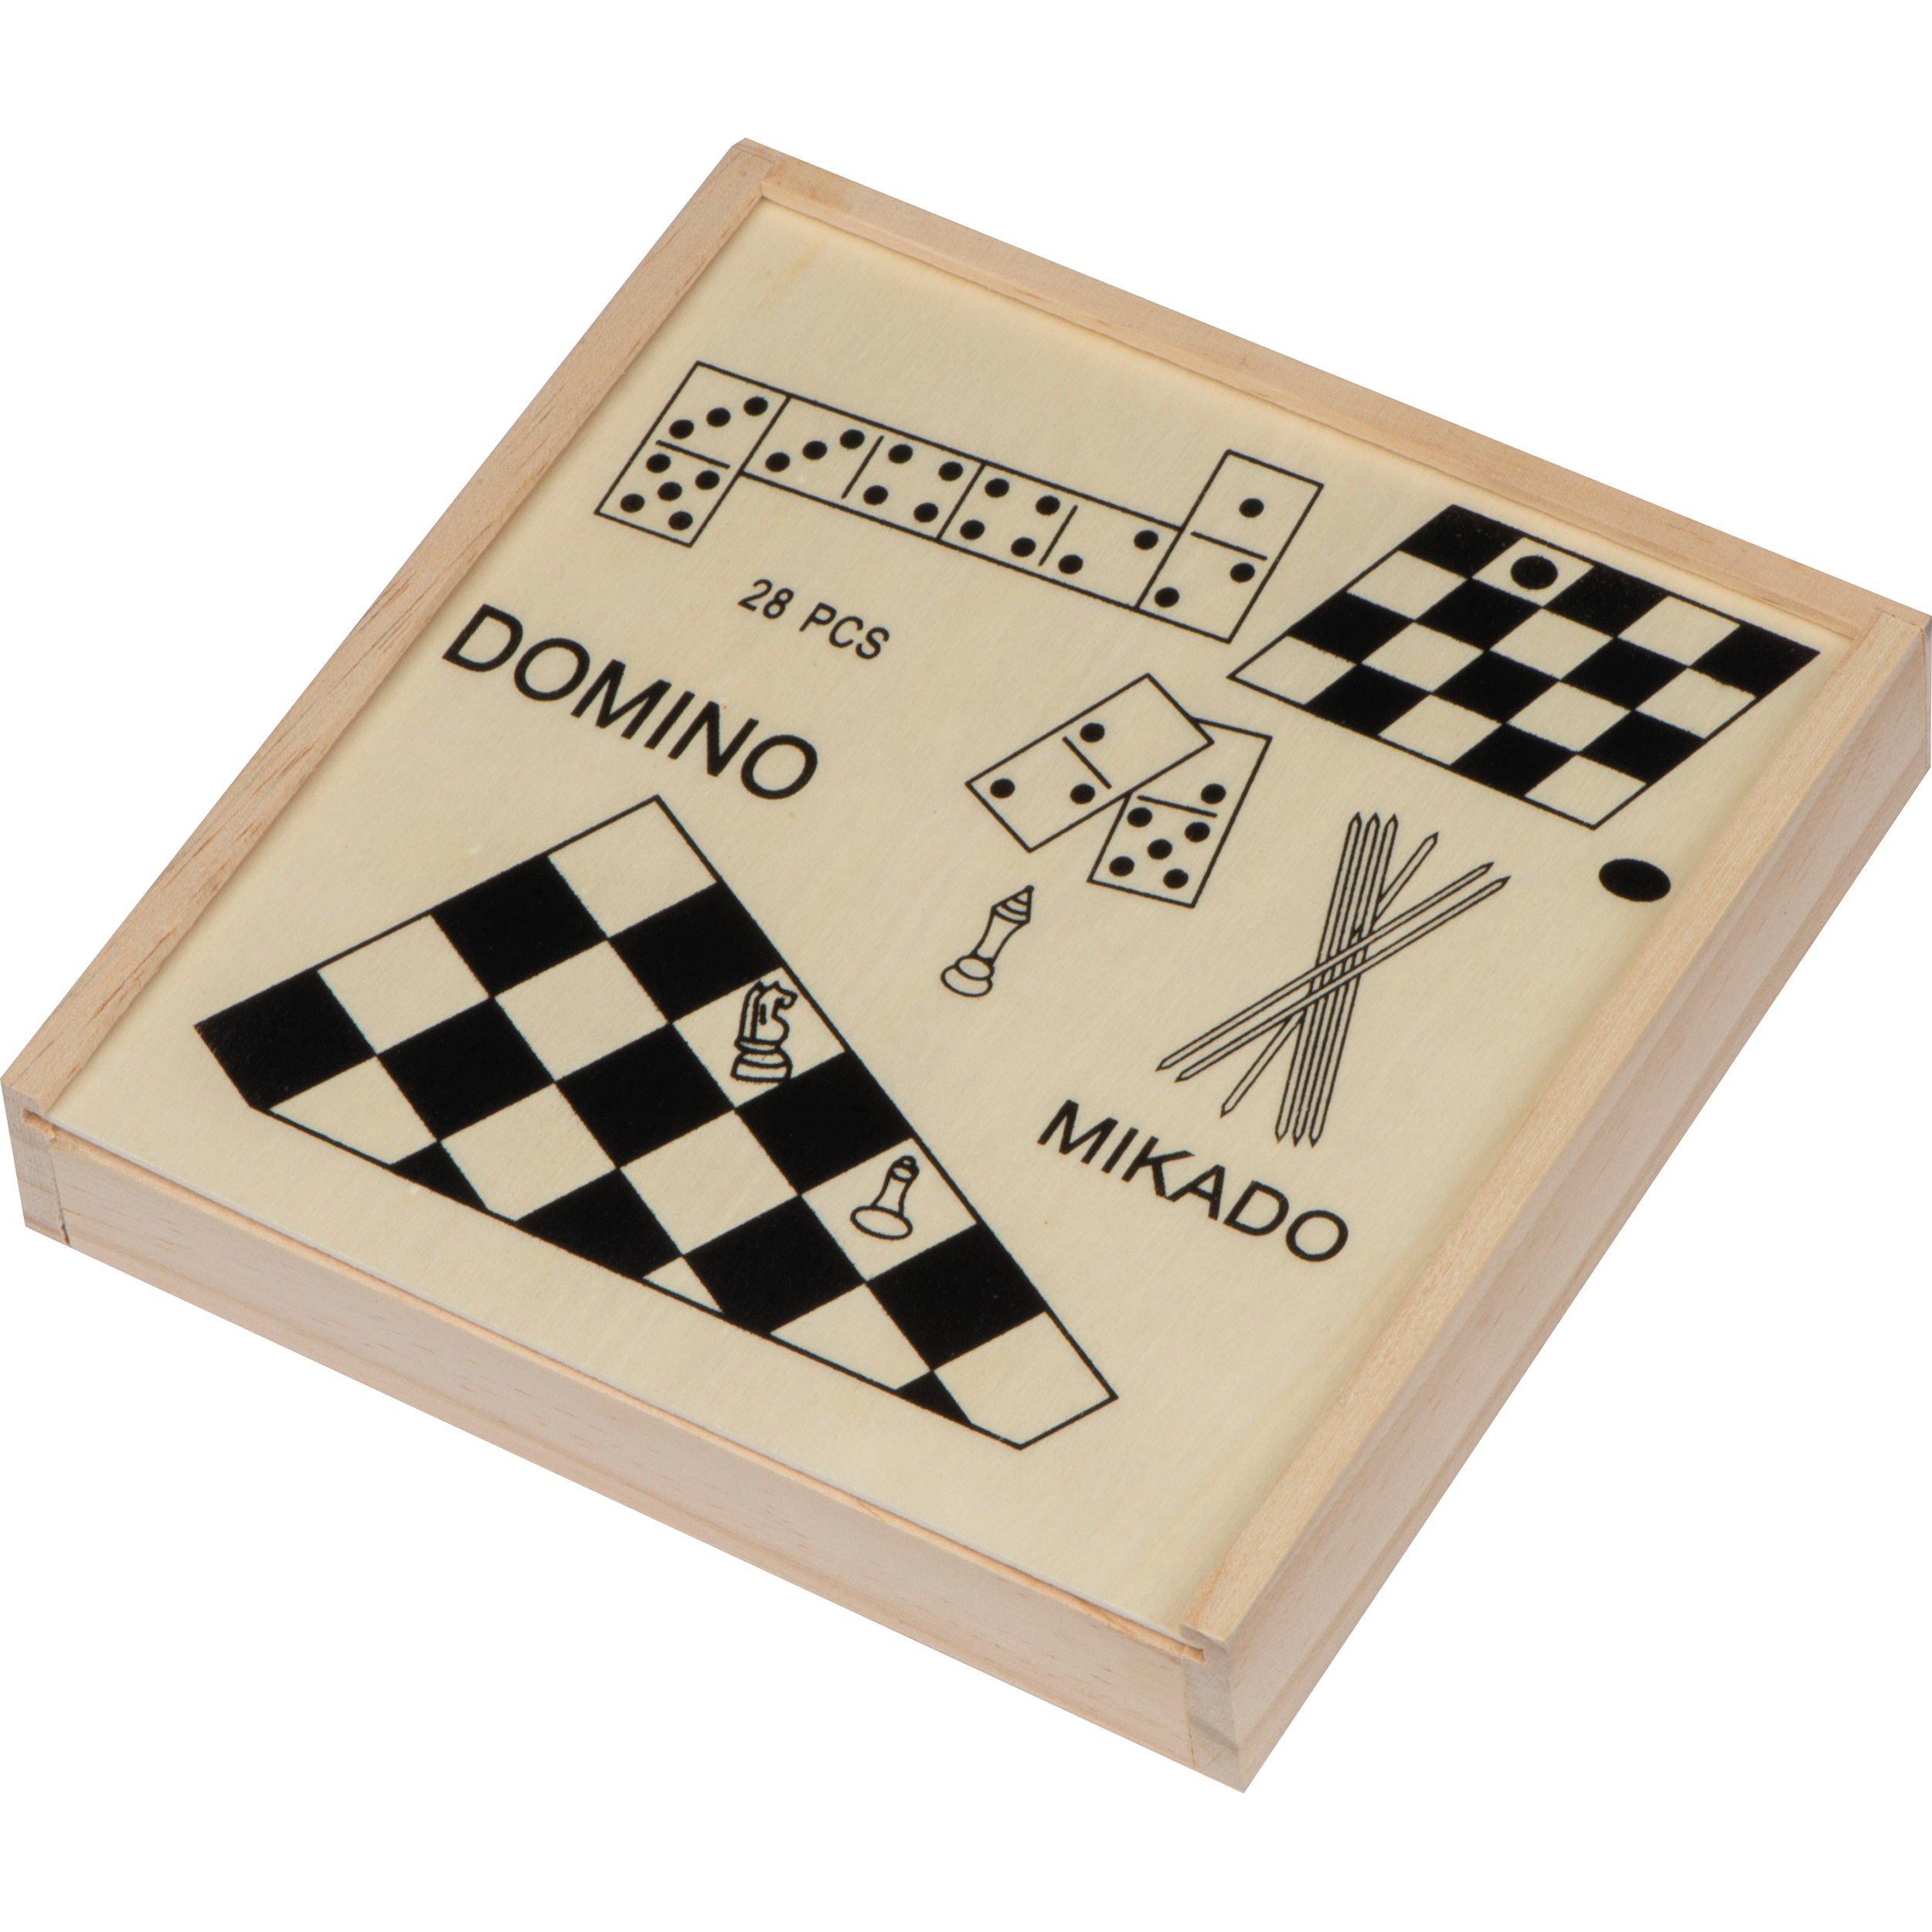 Wooden game set